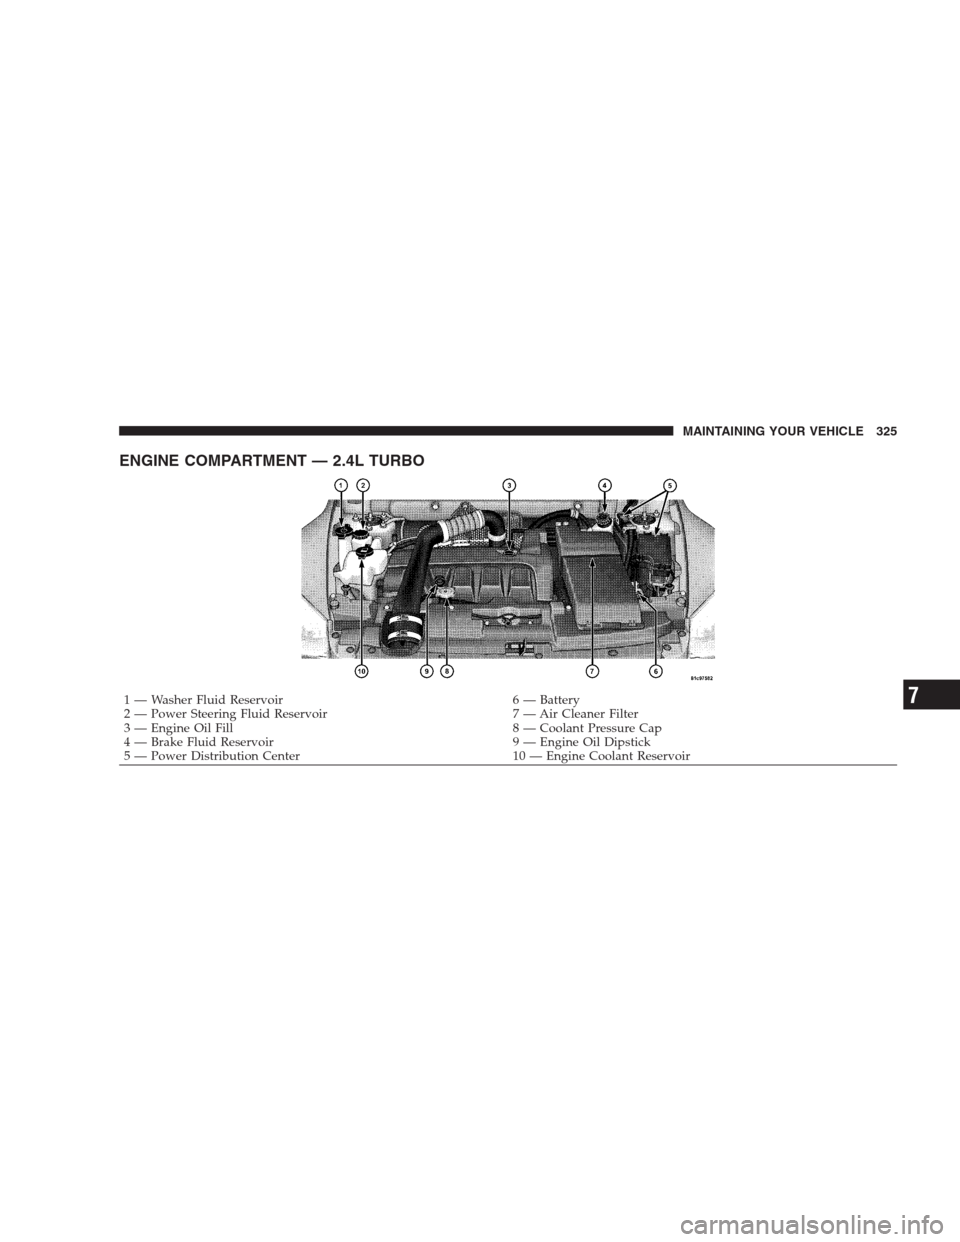 DODGE CALIBER SRT 2009 1.G Owners Manual ENGINE COMPARTMENT — 2.4L TURBO
1 — Washer Fluid Reservoir 6 — Battery
2 — Power Steering Fluid Reservoir 7 — Air Cleaner Filter
3 — Engine Oil Fill 8 — Coolant Pressure Cap
4 — Brake 